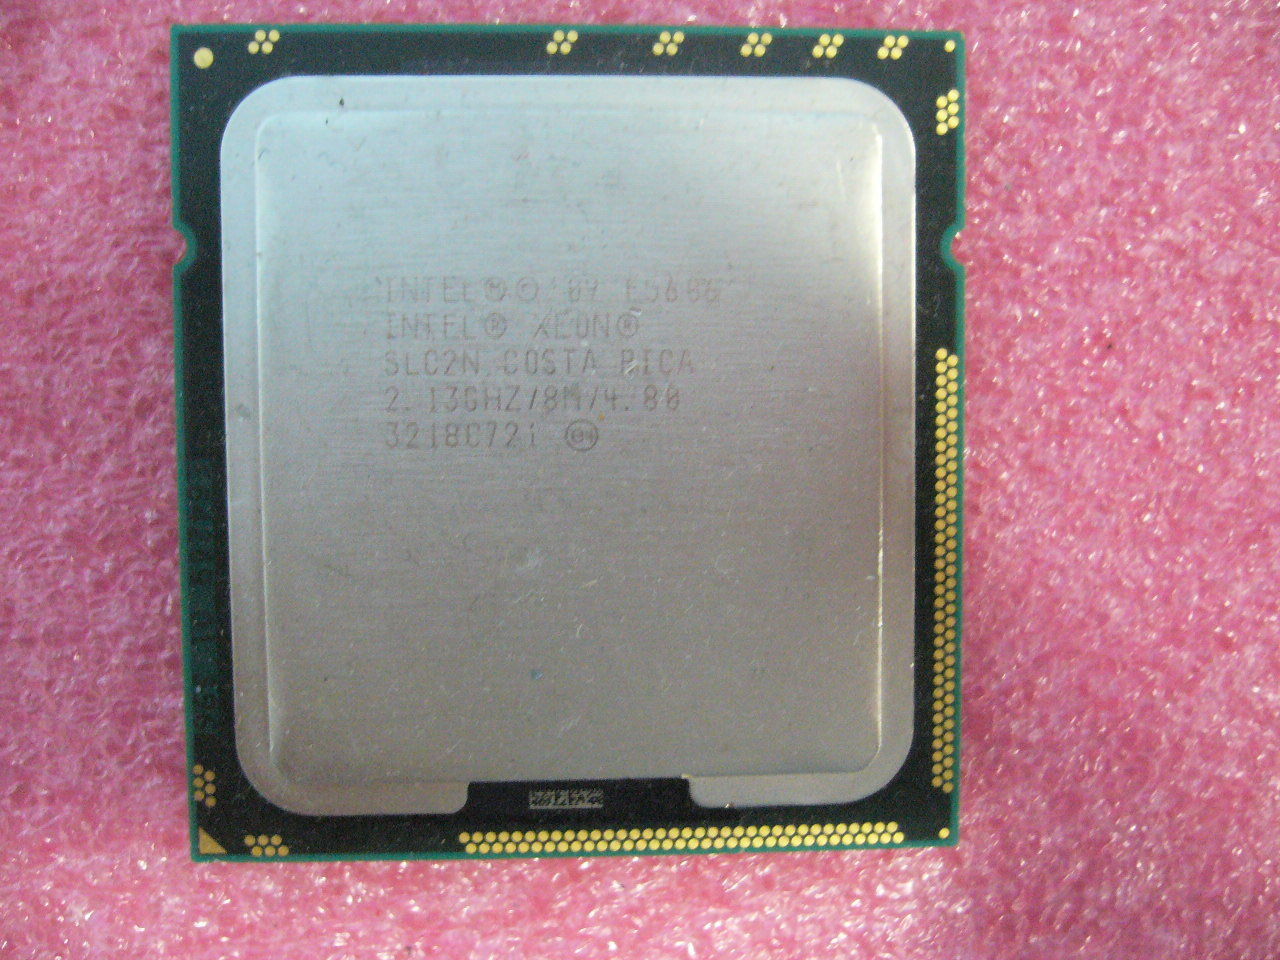 QTY 1x INTEL Quad-Cores CPU E5606 2.13GHZ/8MB 4.8GT/s QPI LGA1366 SLC2N